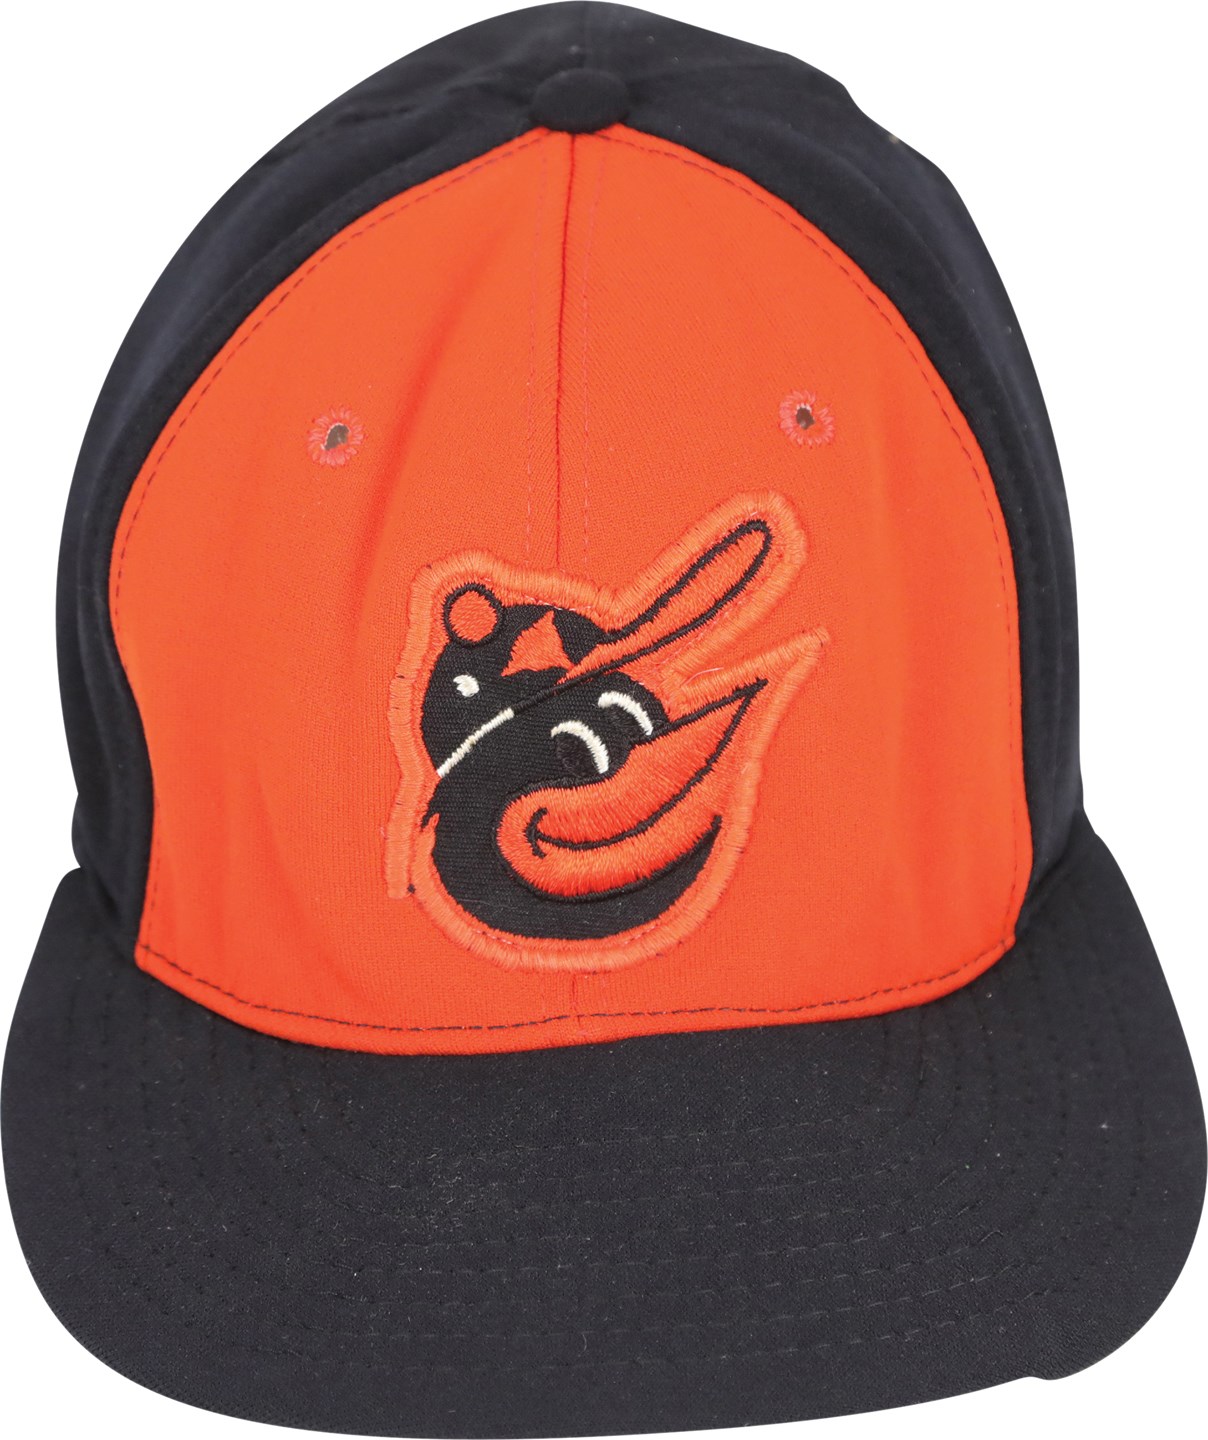 - 1976 Brooks Robinson Baltimore Orioles Game Worn Hat